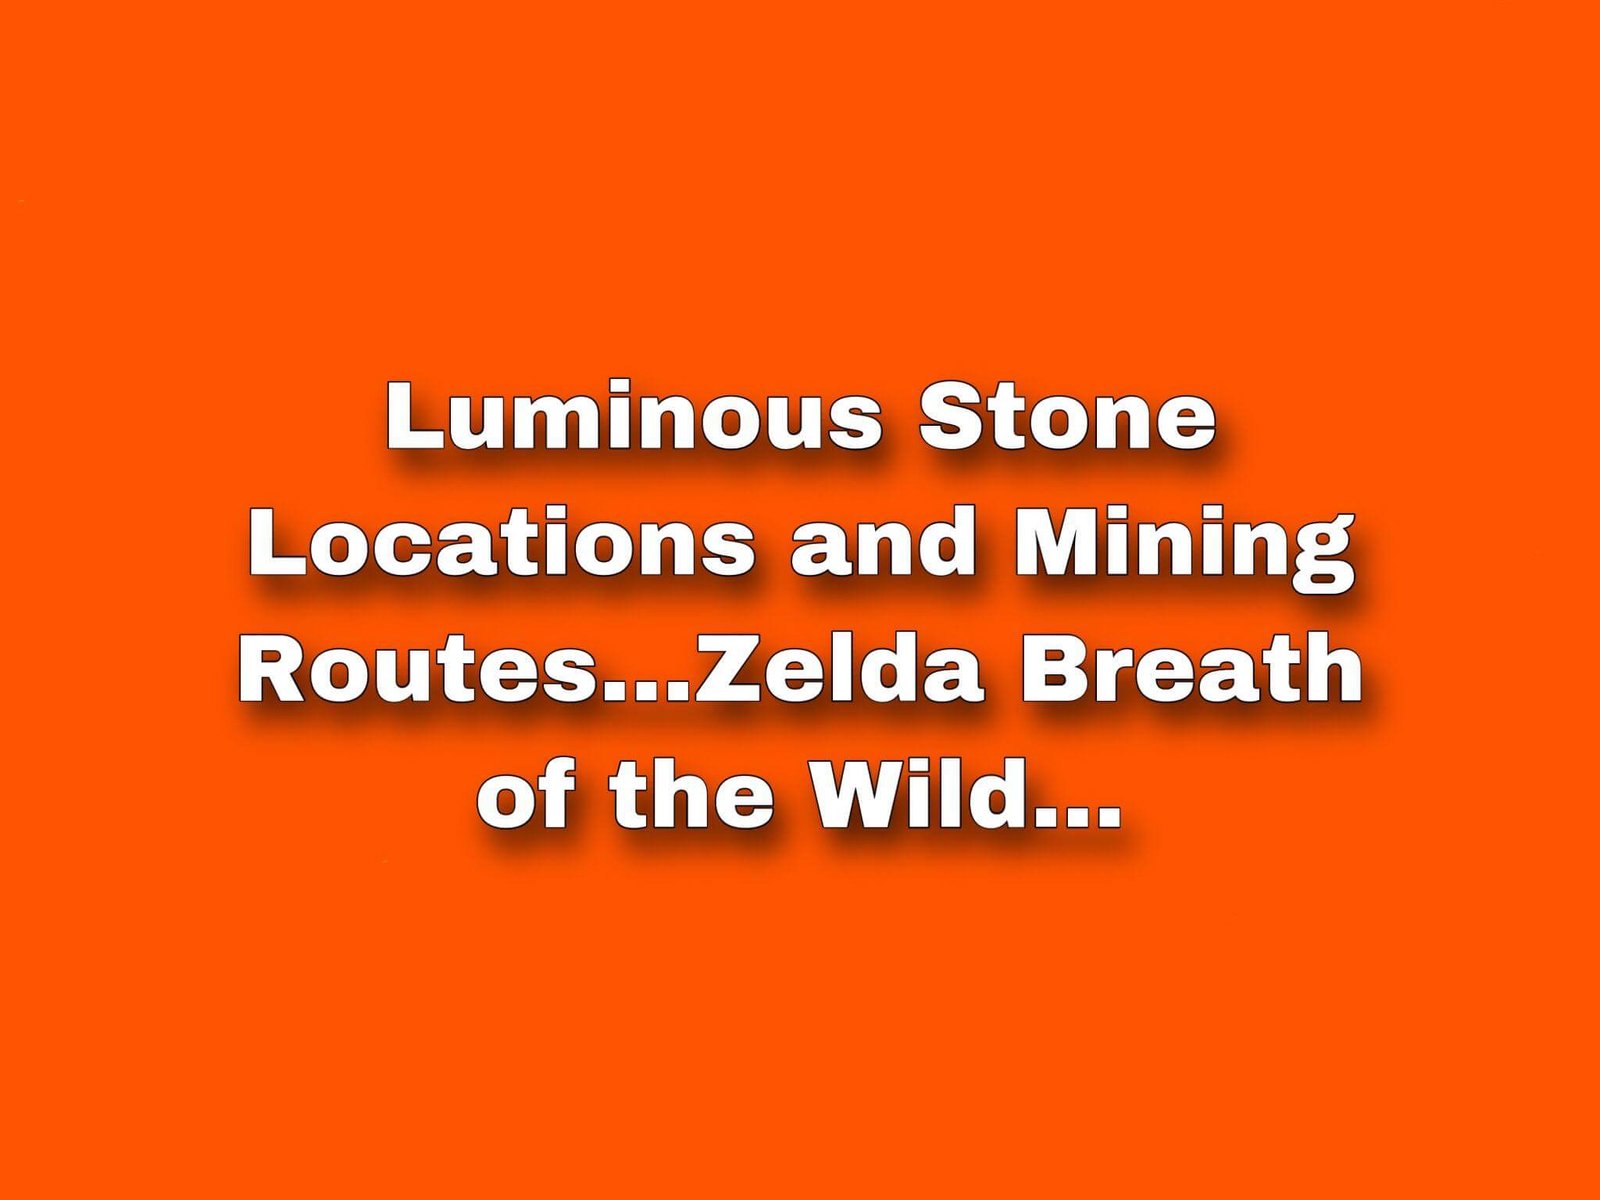 https://shyoz.com/wp-content/uploads/2021/03/Luminous-Stone-Locations-and-Mining-Routes..jpg